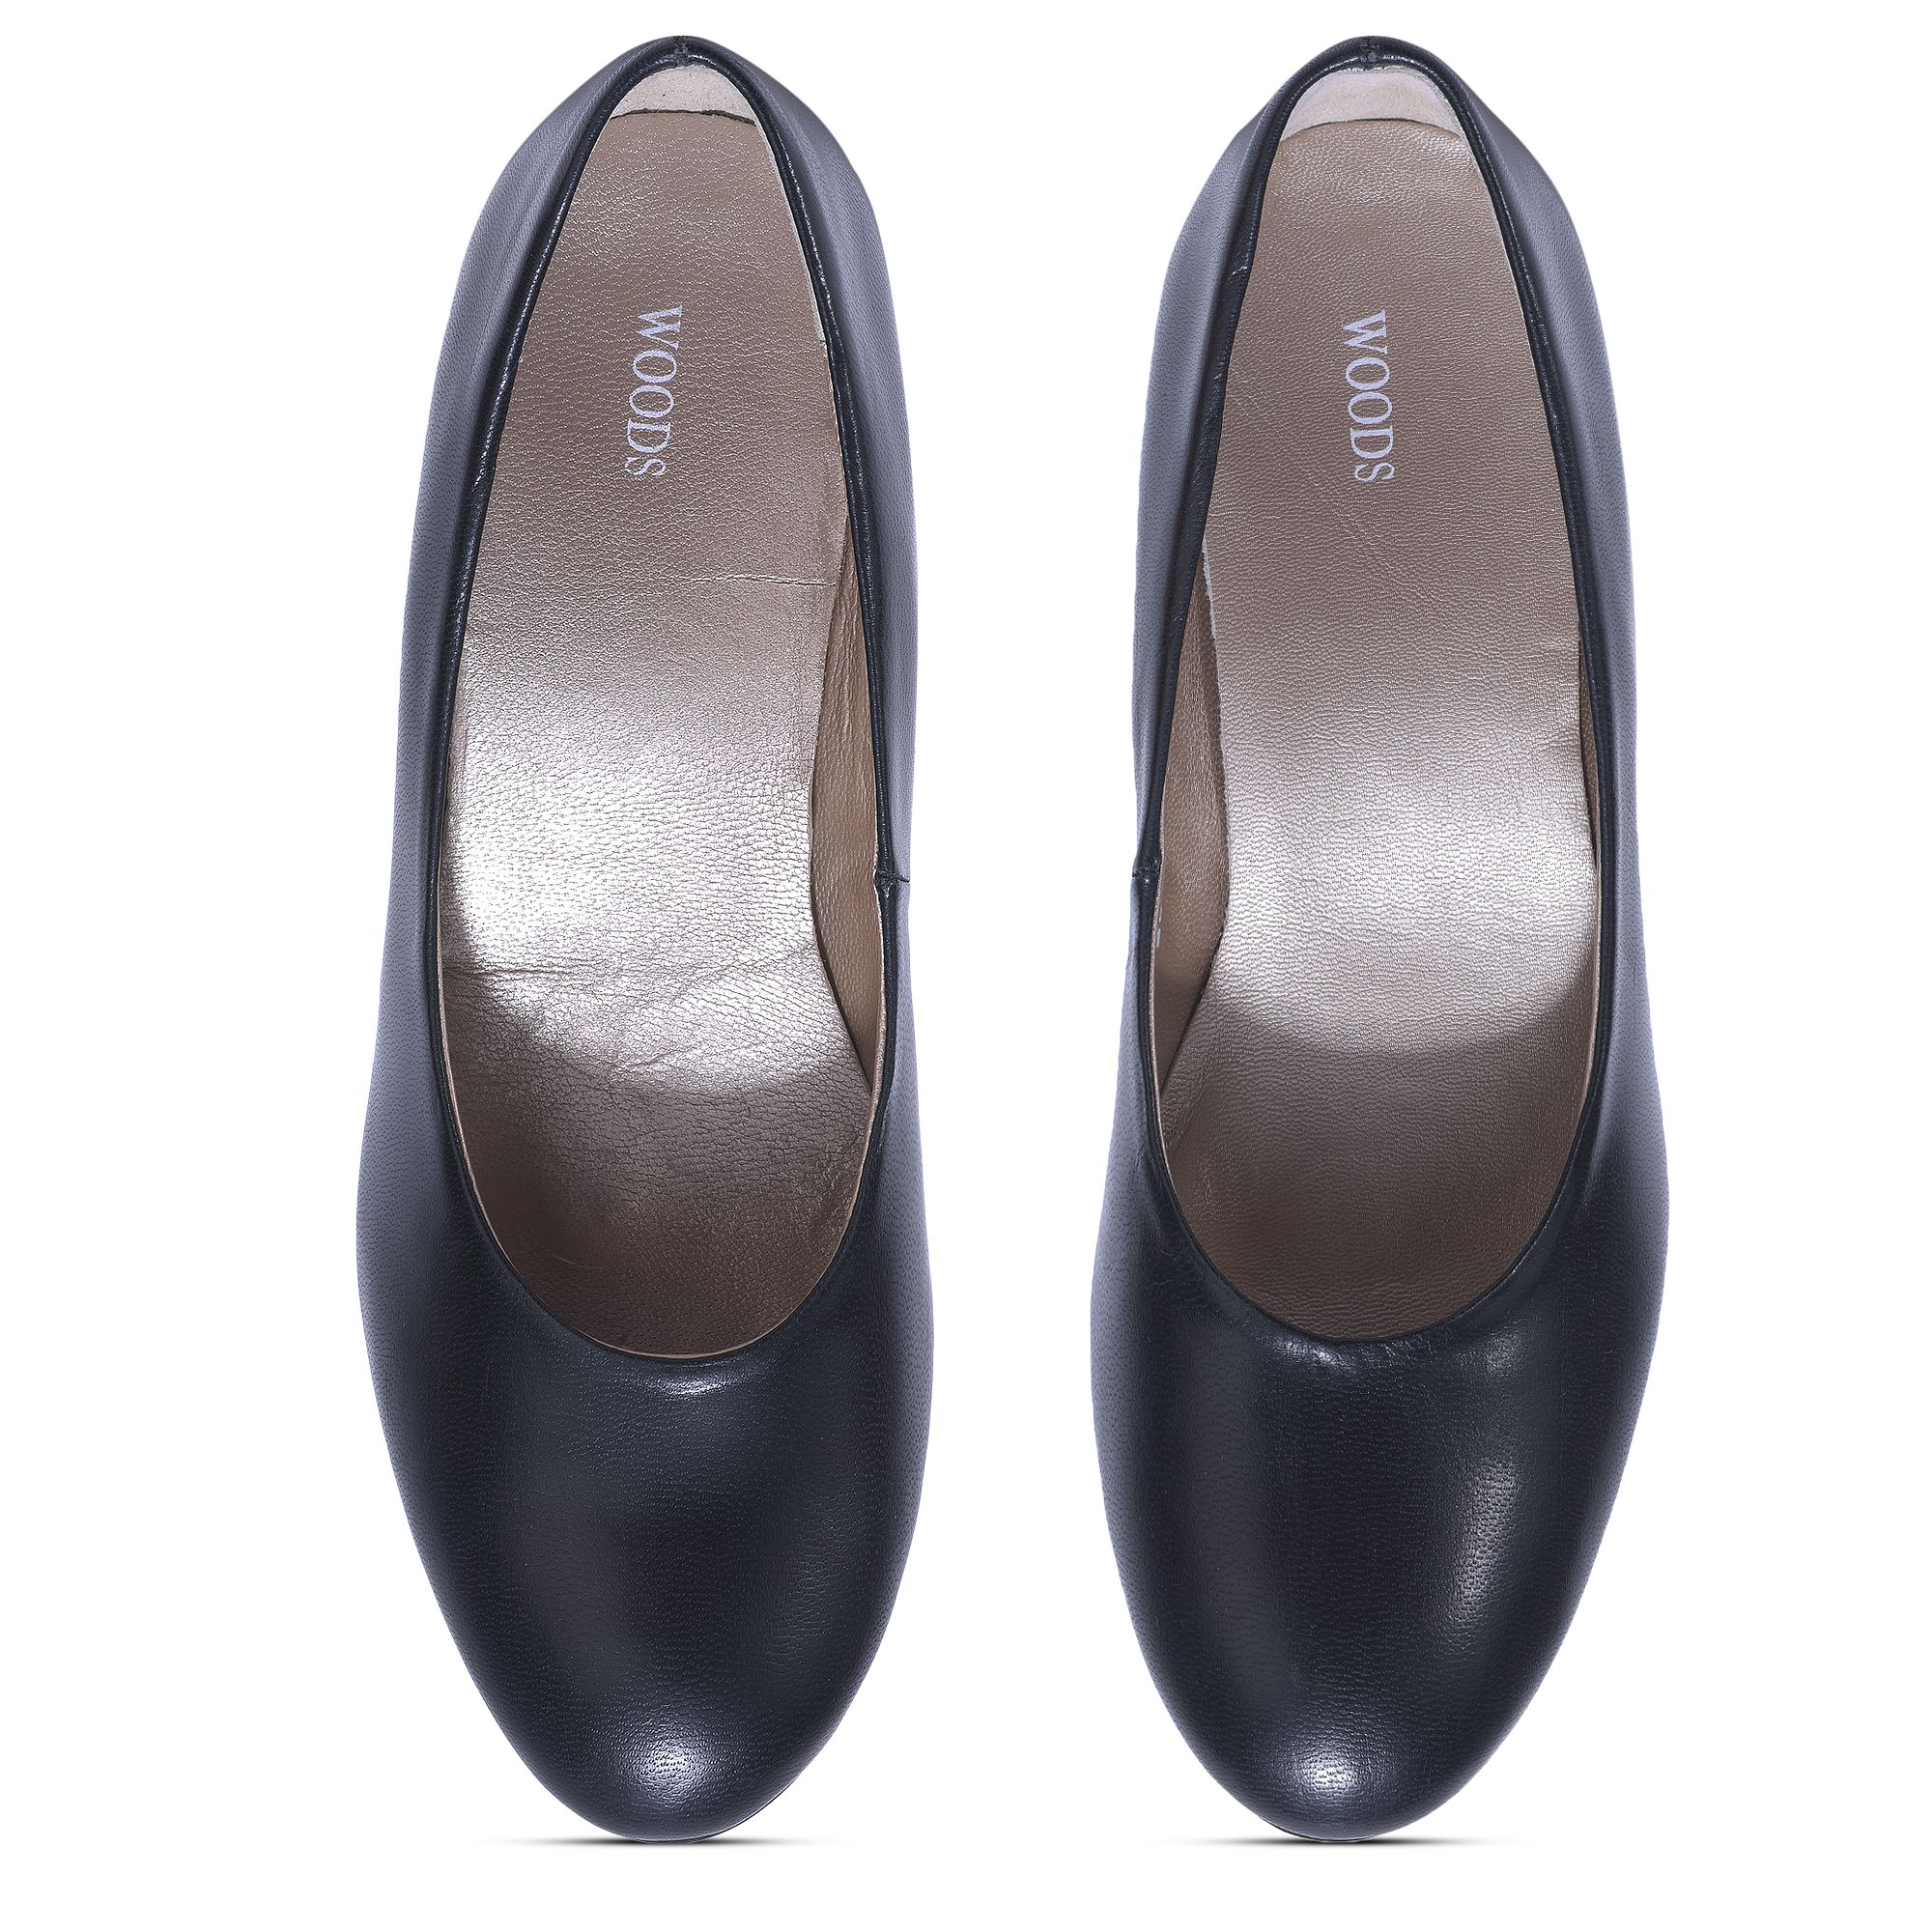 BLACK high heel shoes for women